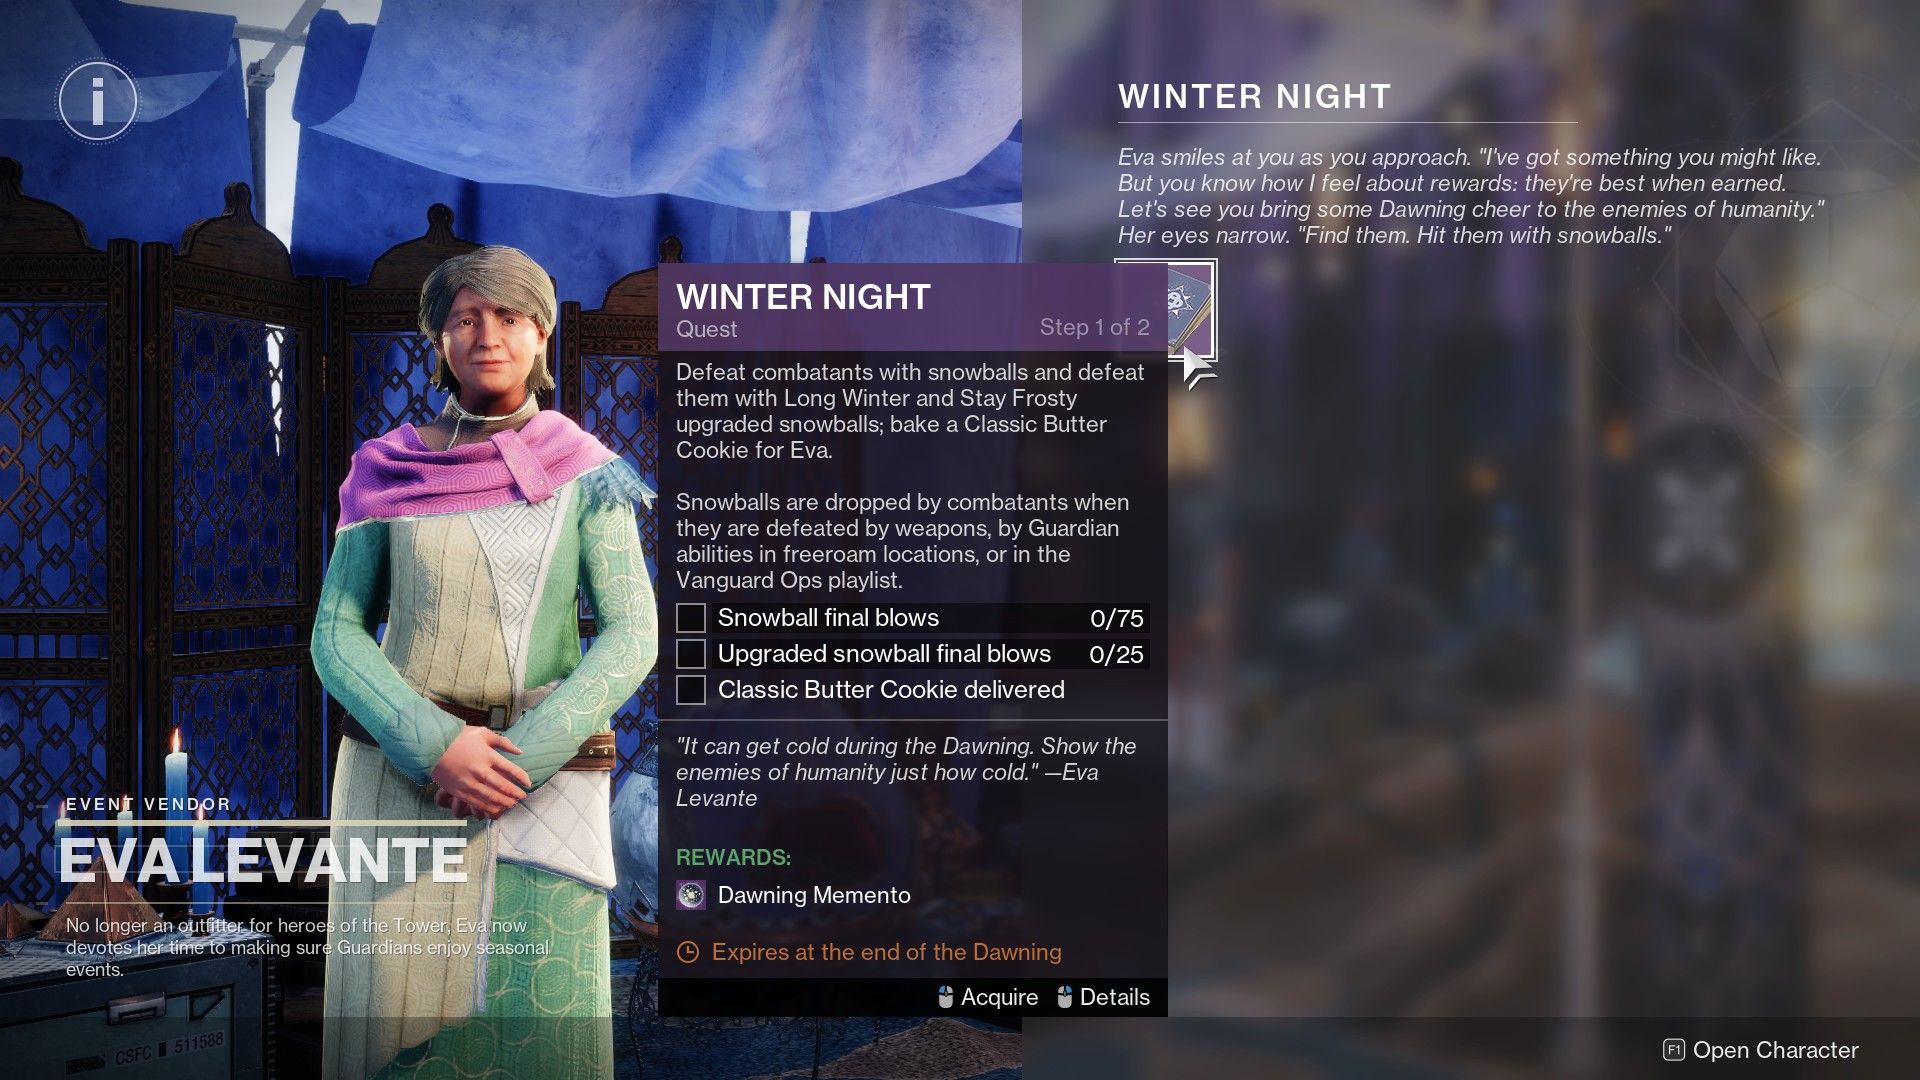 The Winter Night quest in Destiny 2